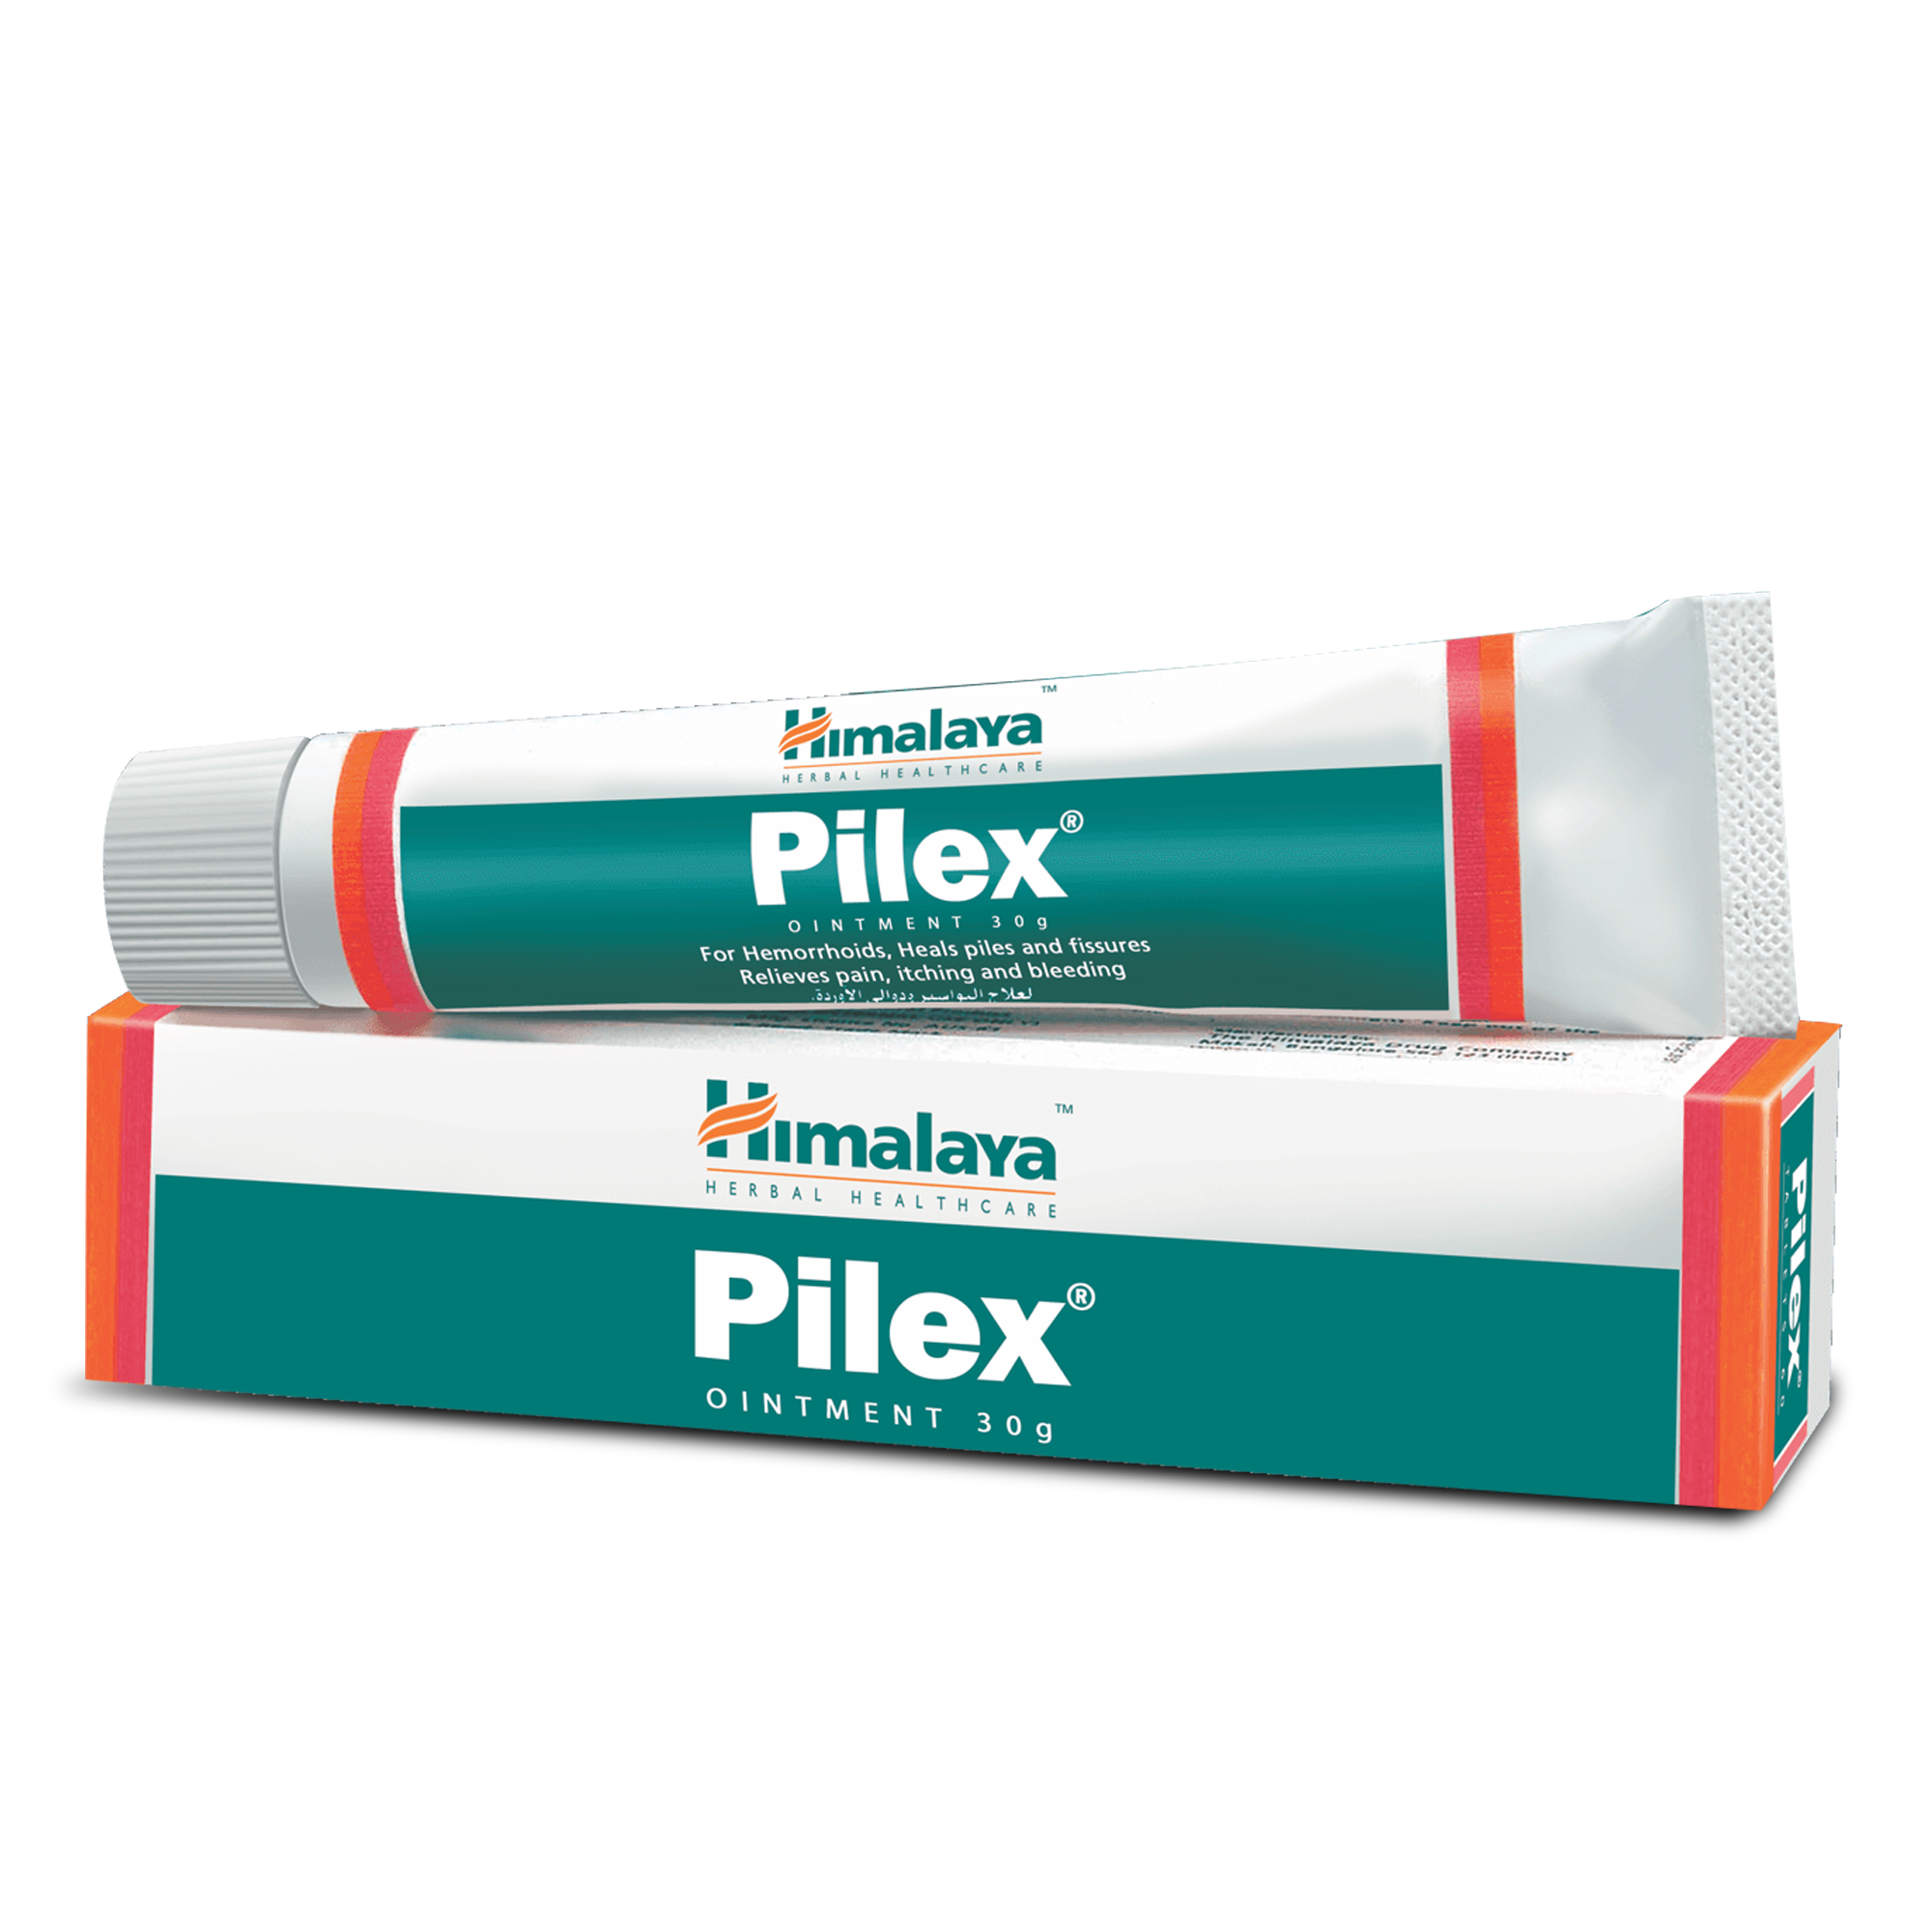 Himalaya Pilex Ointment 30g - For Hemorrhoids & Piles